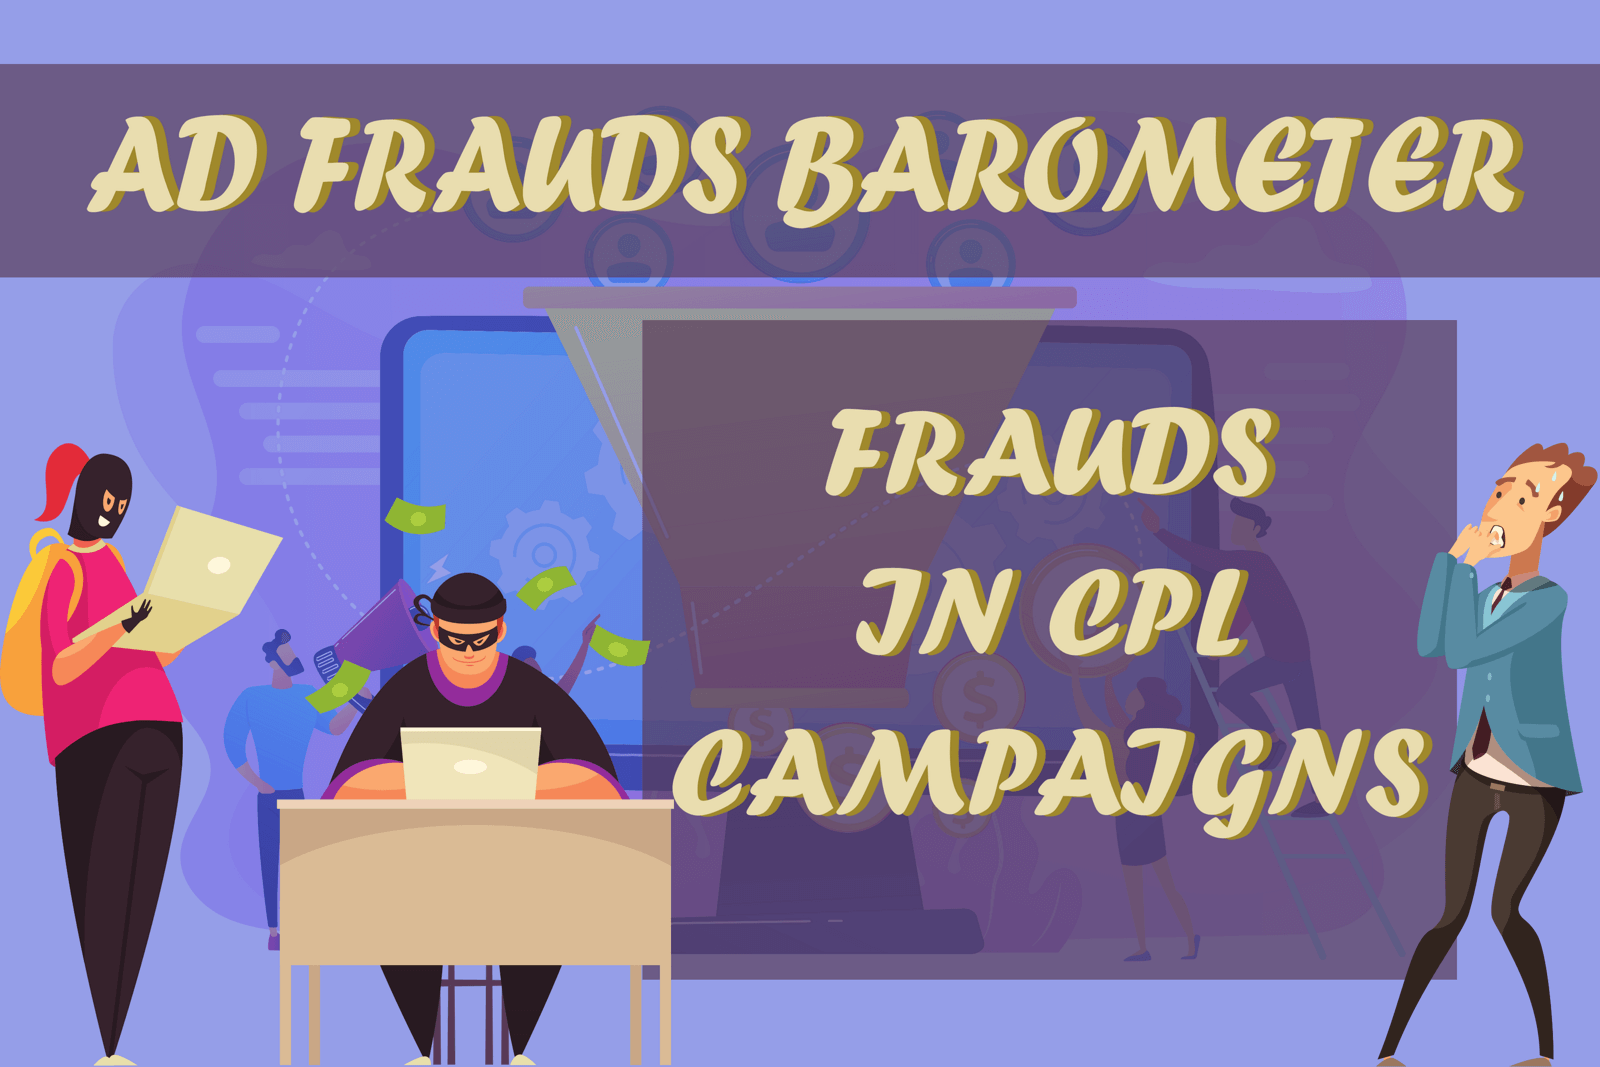 Ad Frauds Barometer - Sham forms, i.e. frauds in CPL